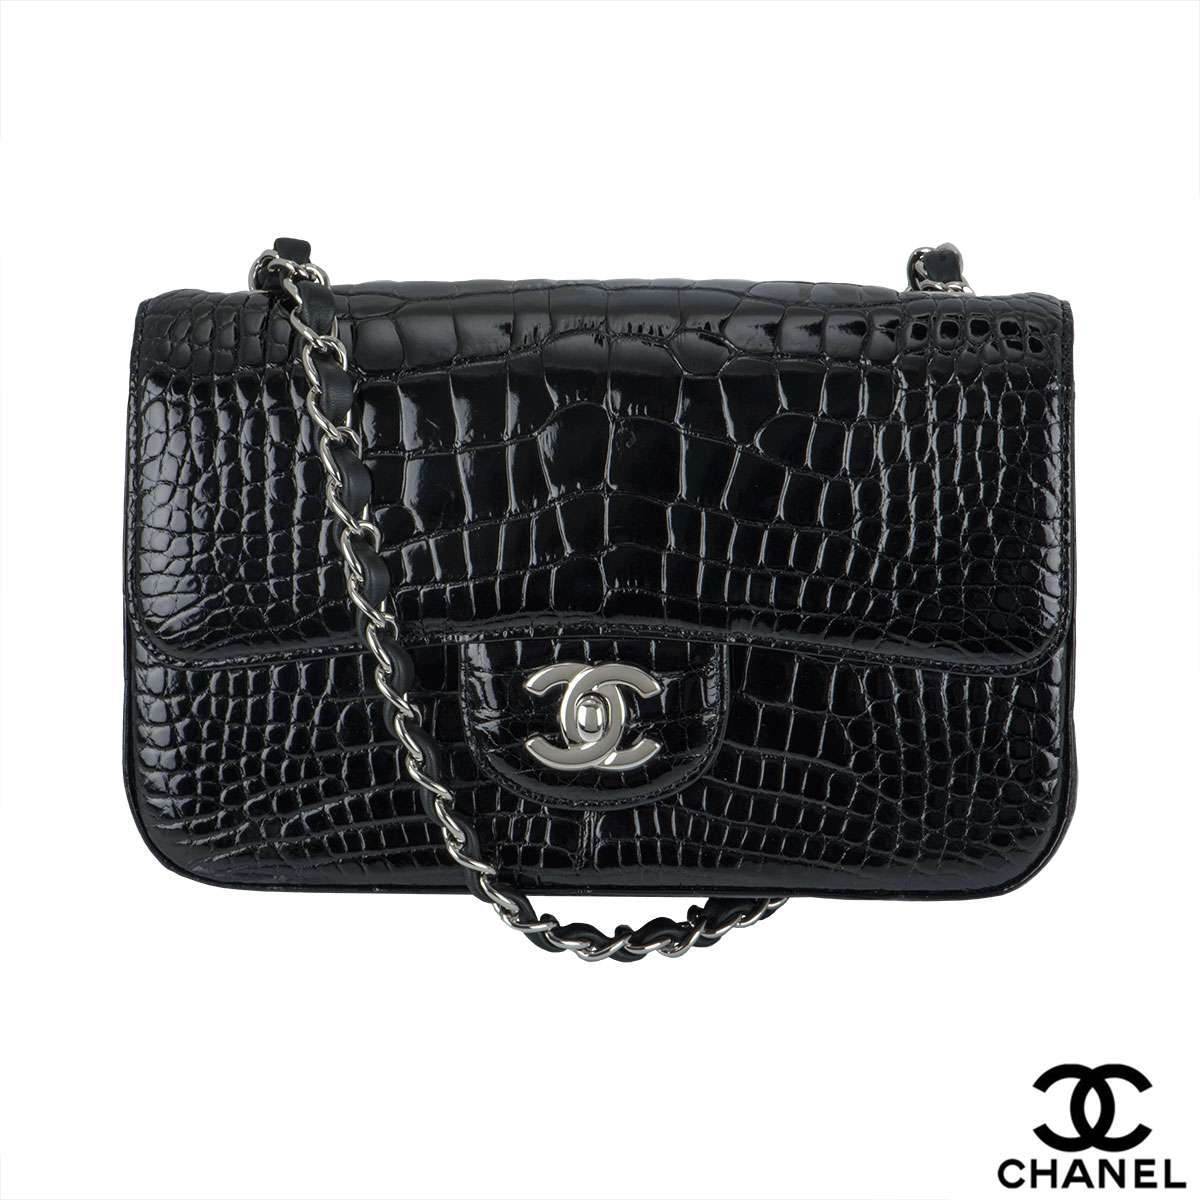 Chanel's diamond alligator bag